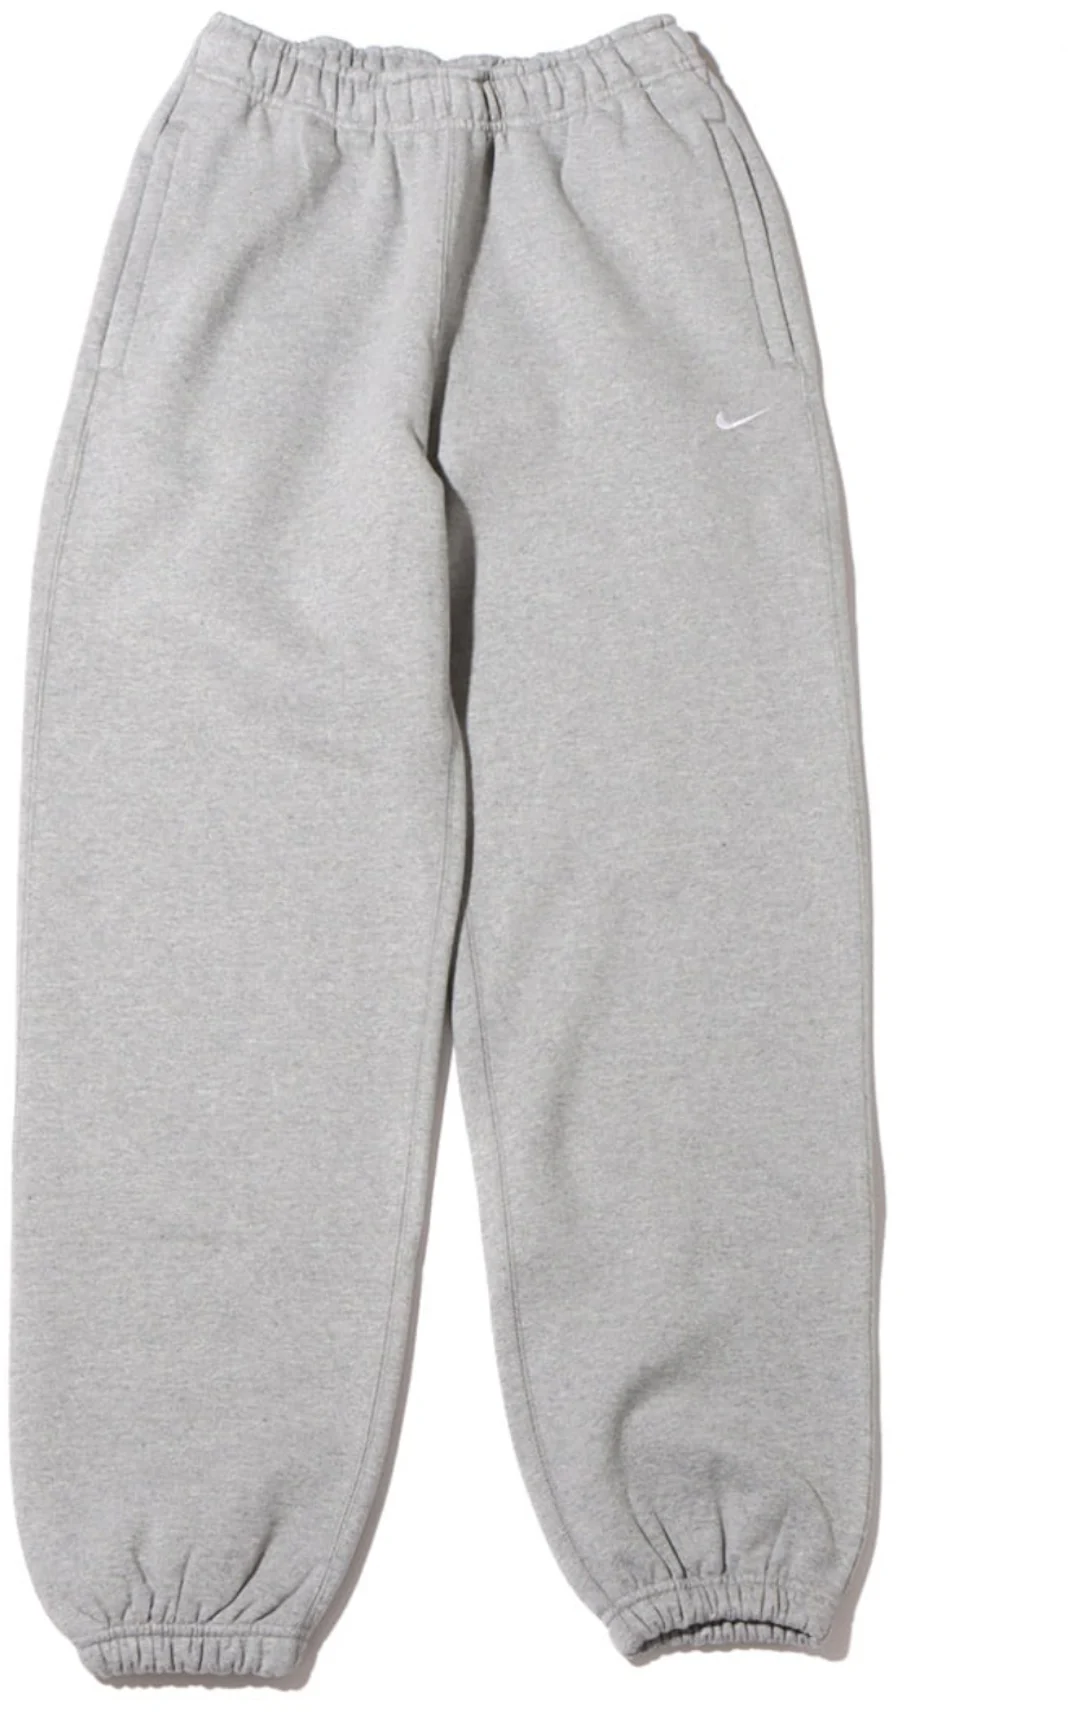 NikeLab Women's Solo Swoosh Fleece Sweatpants (Asia Sizing) Dark